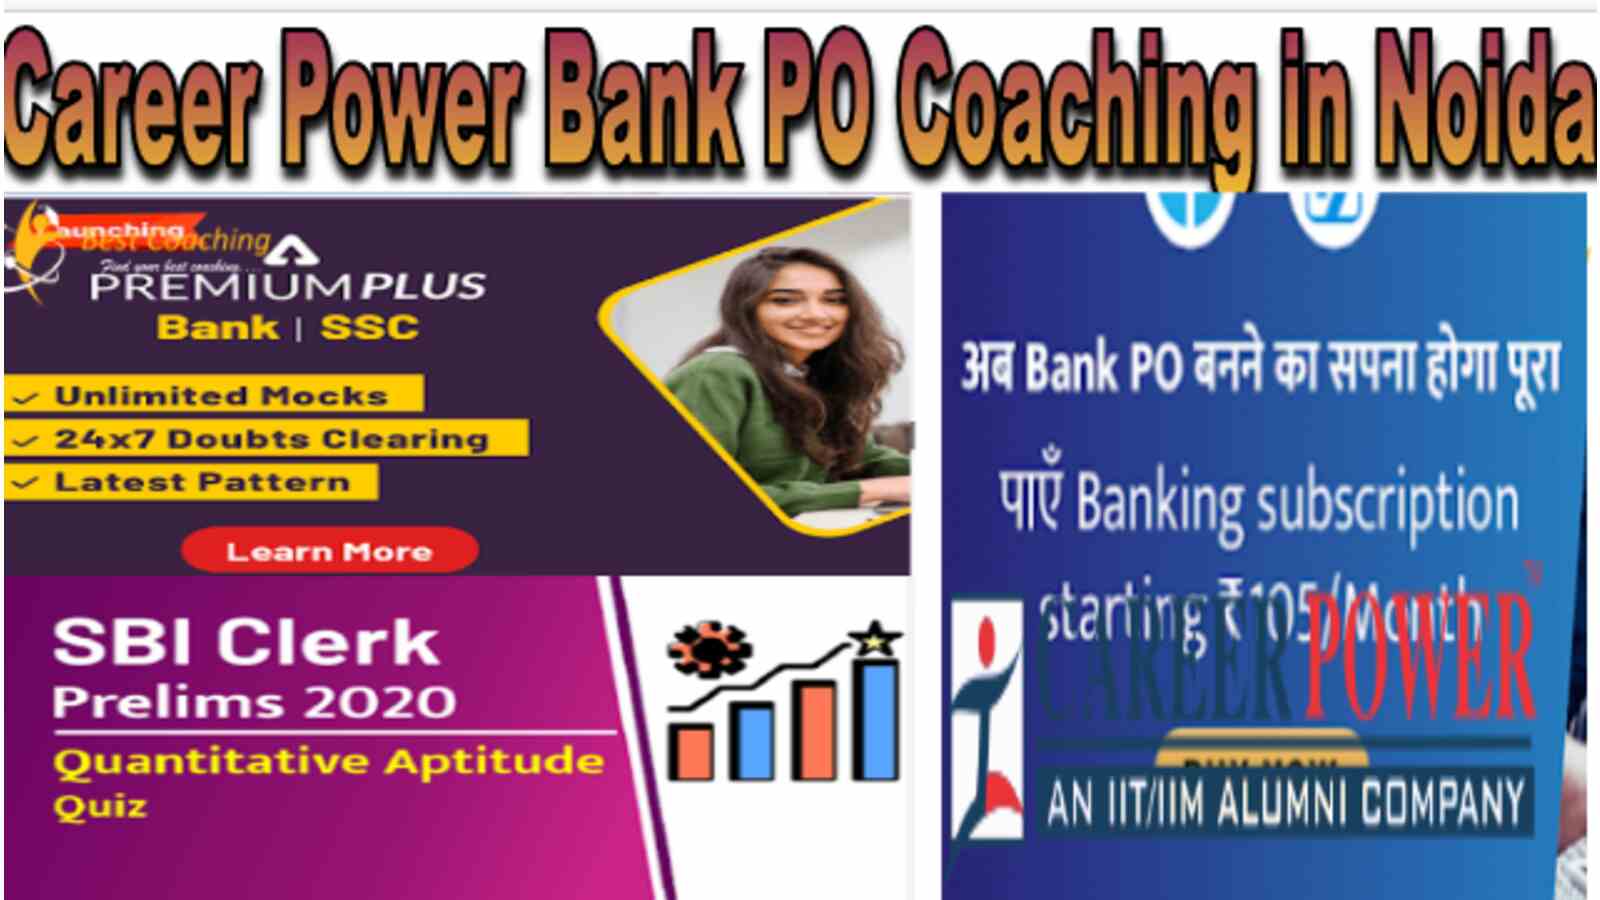 Career Power Bank PO Coaching in Noida